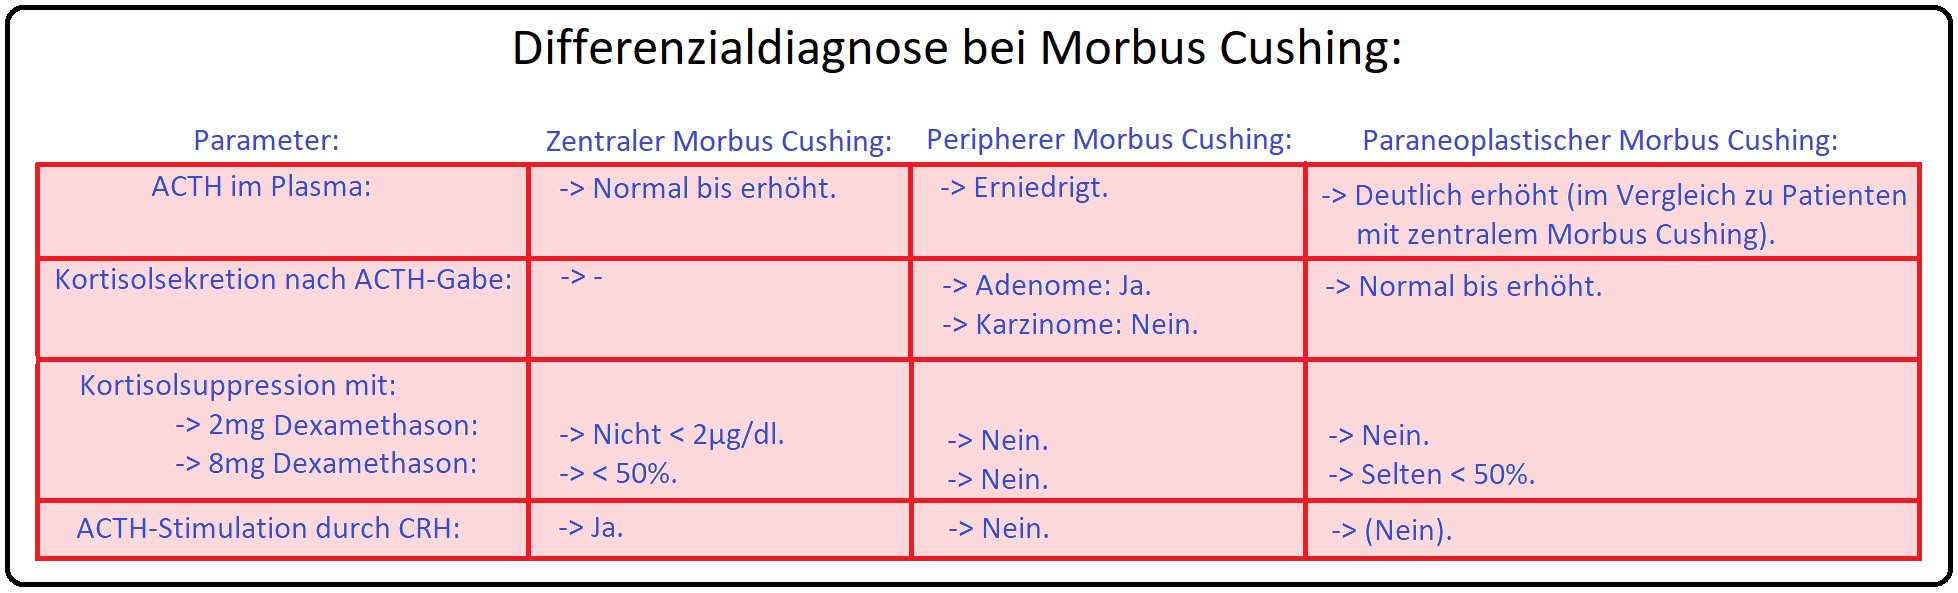 676 Differenzialdiagnose bei Morbus Cushing